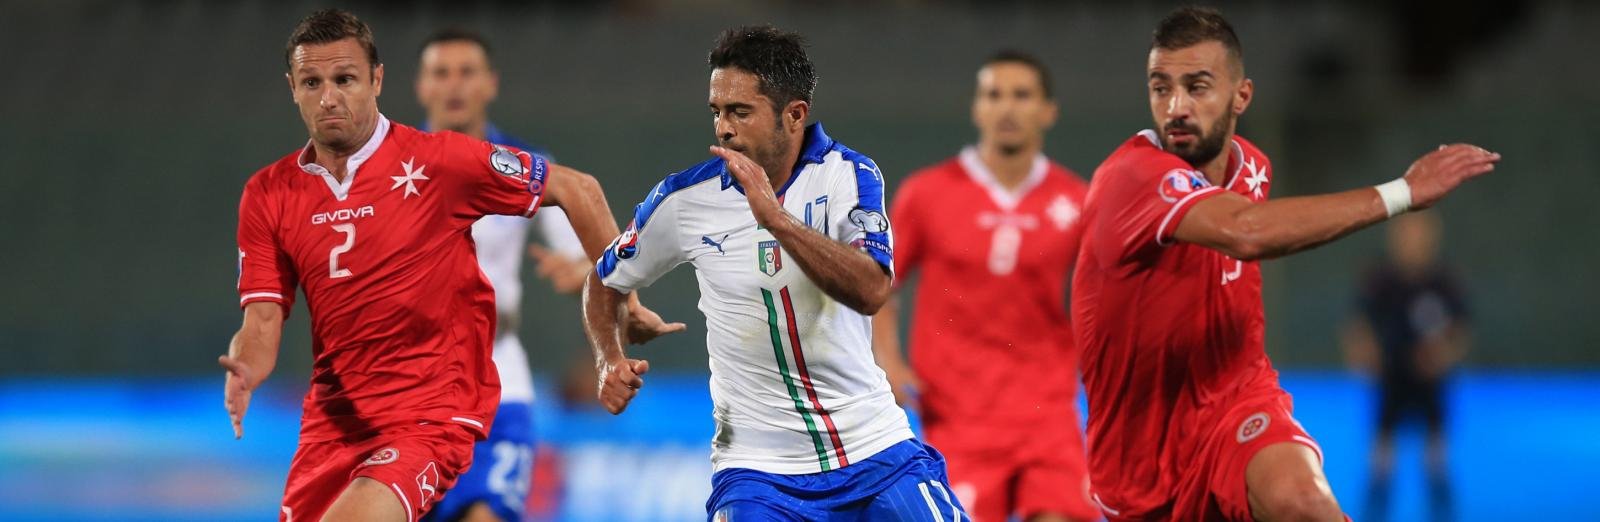 Leicester launch £8m offer for 13-goal Italy international striker